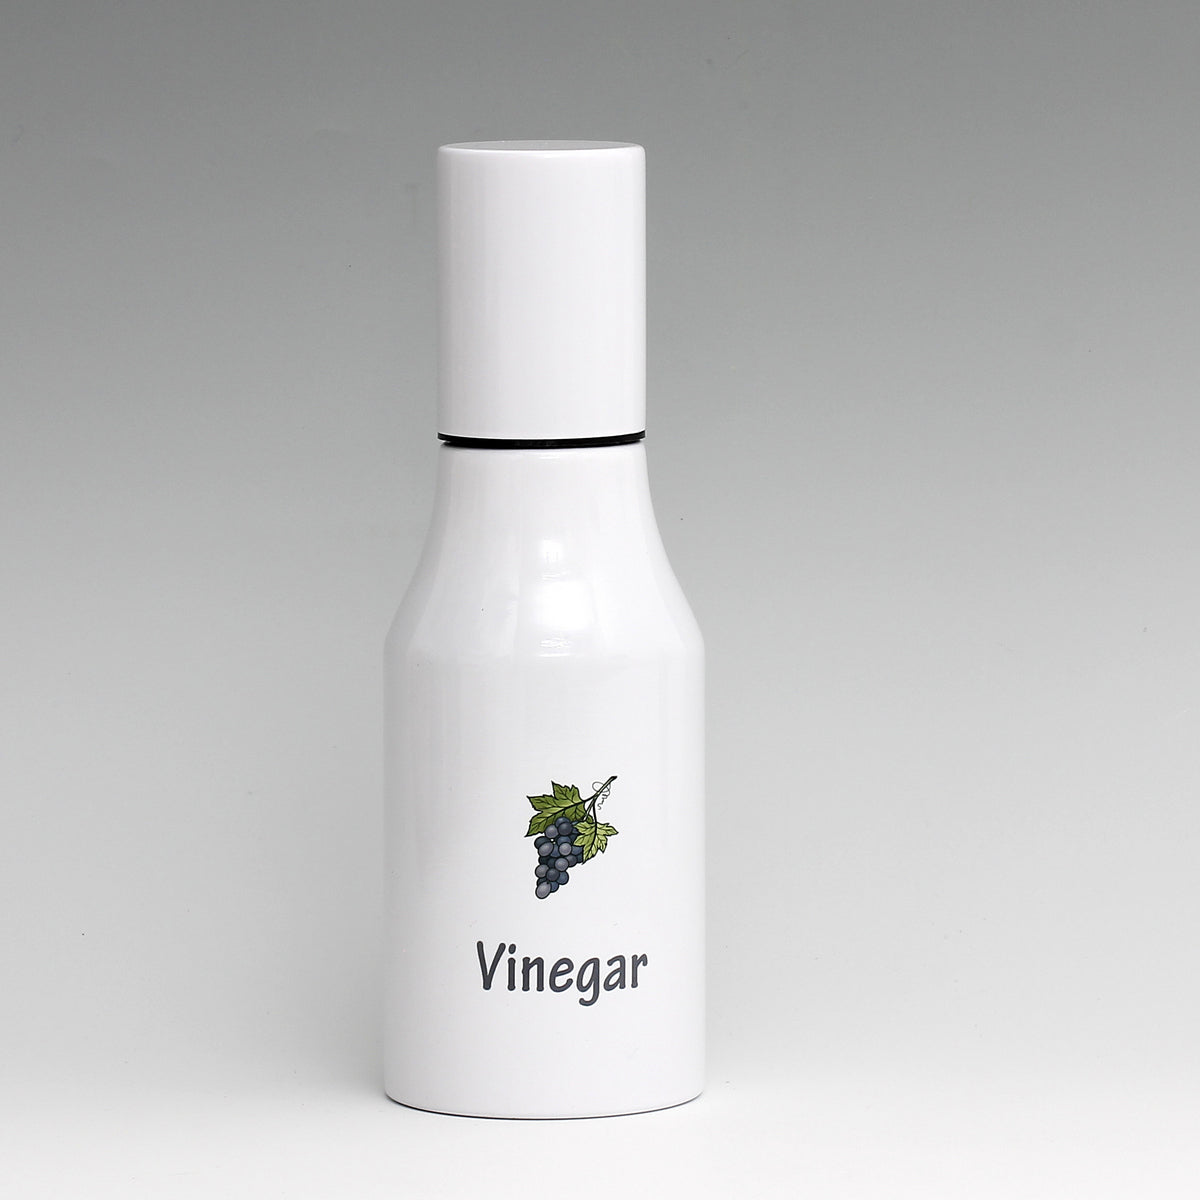 SUBLIMART: Vinegar (Aceto) Dispenser with non-drip pourer and dust cover cap (Design 06V)